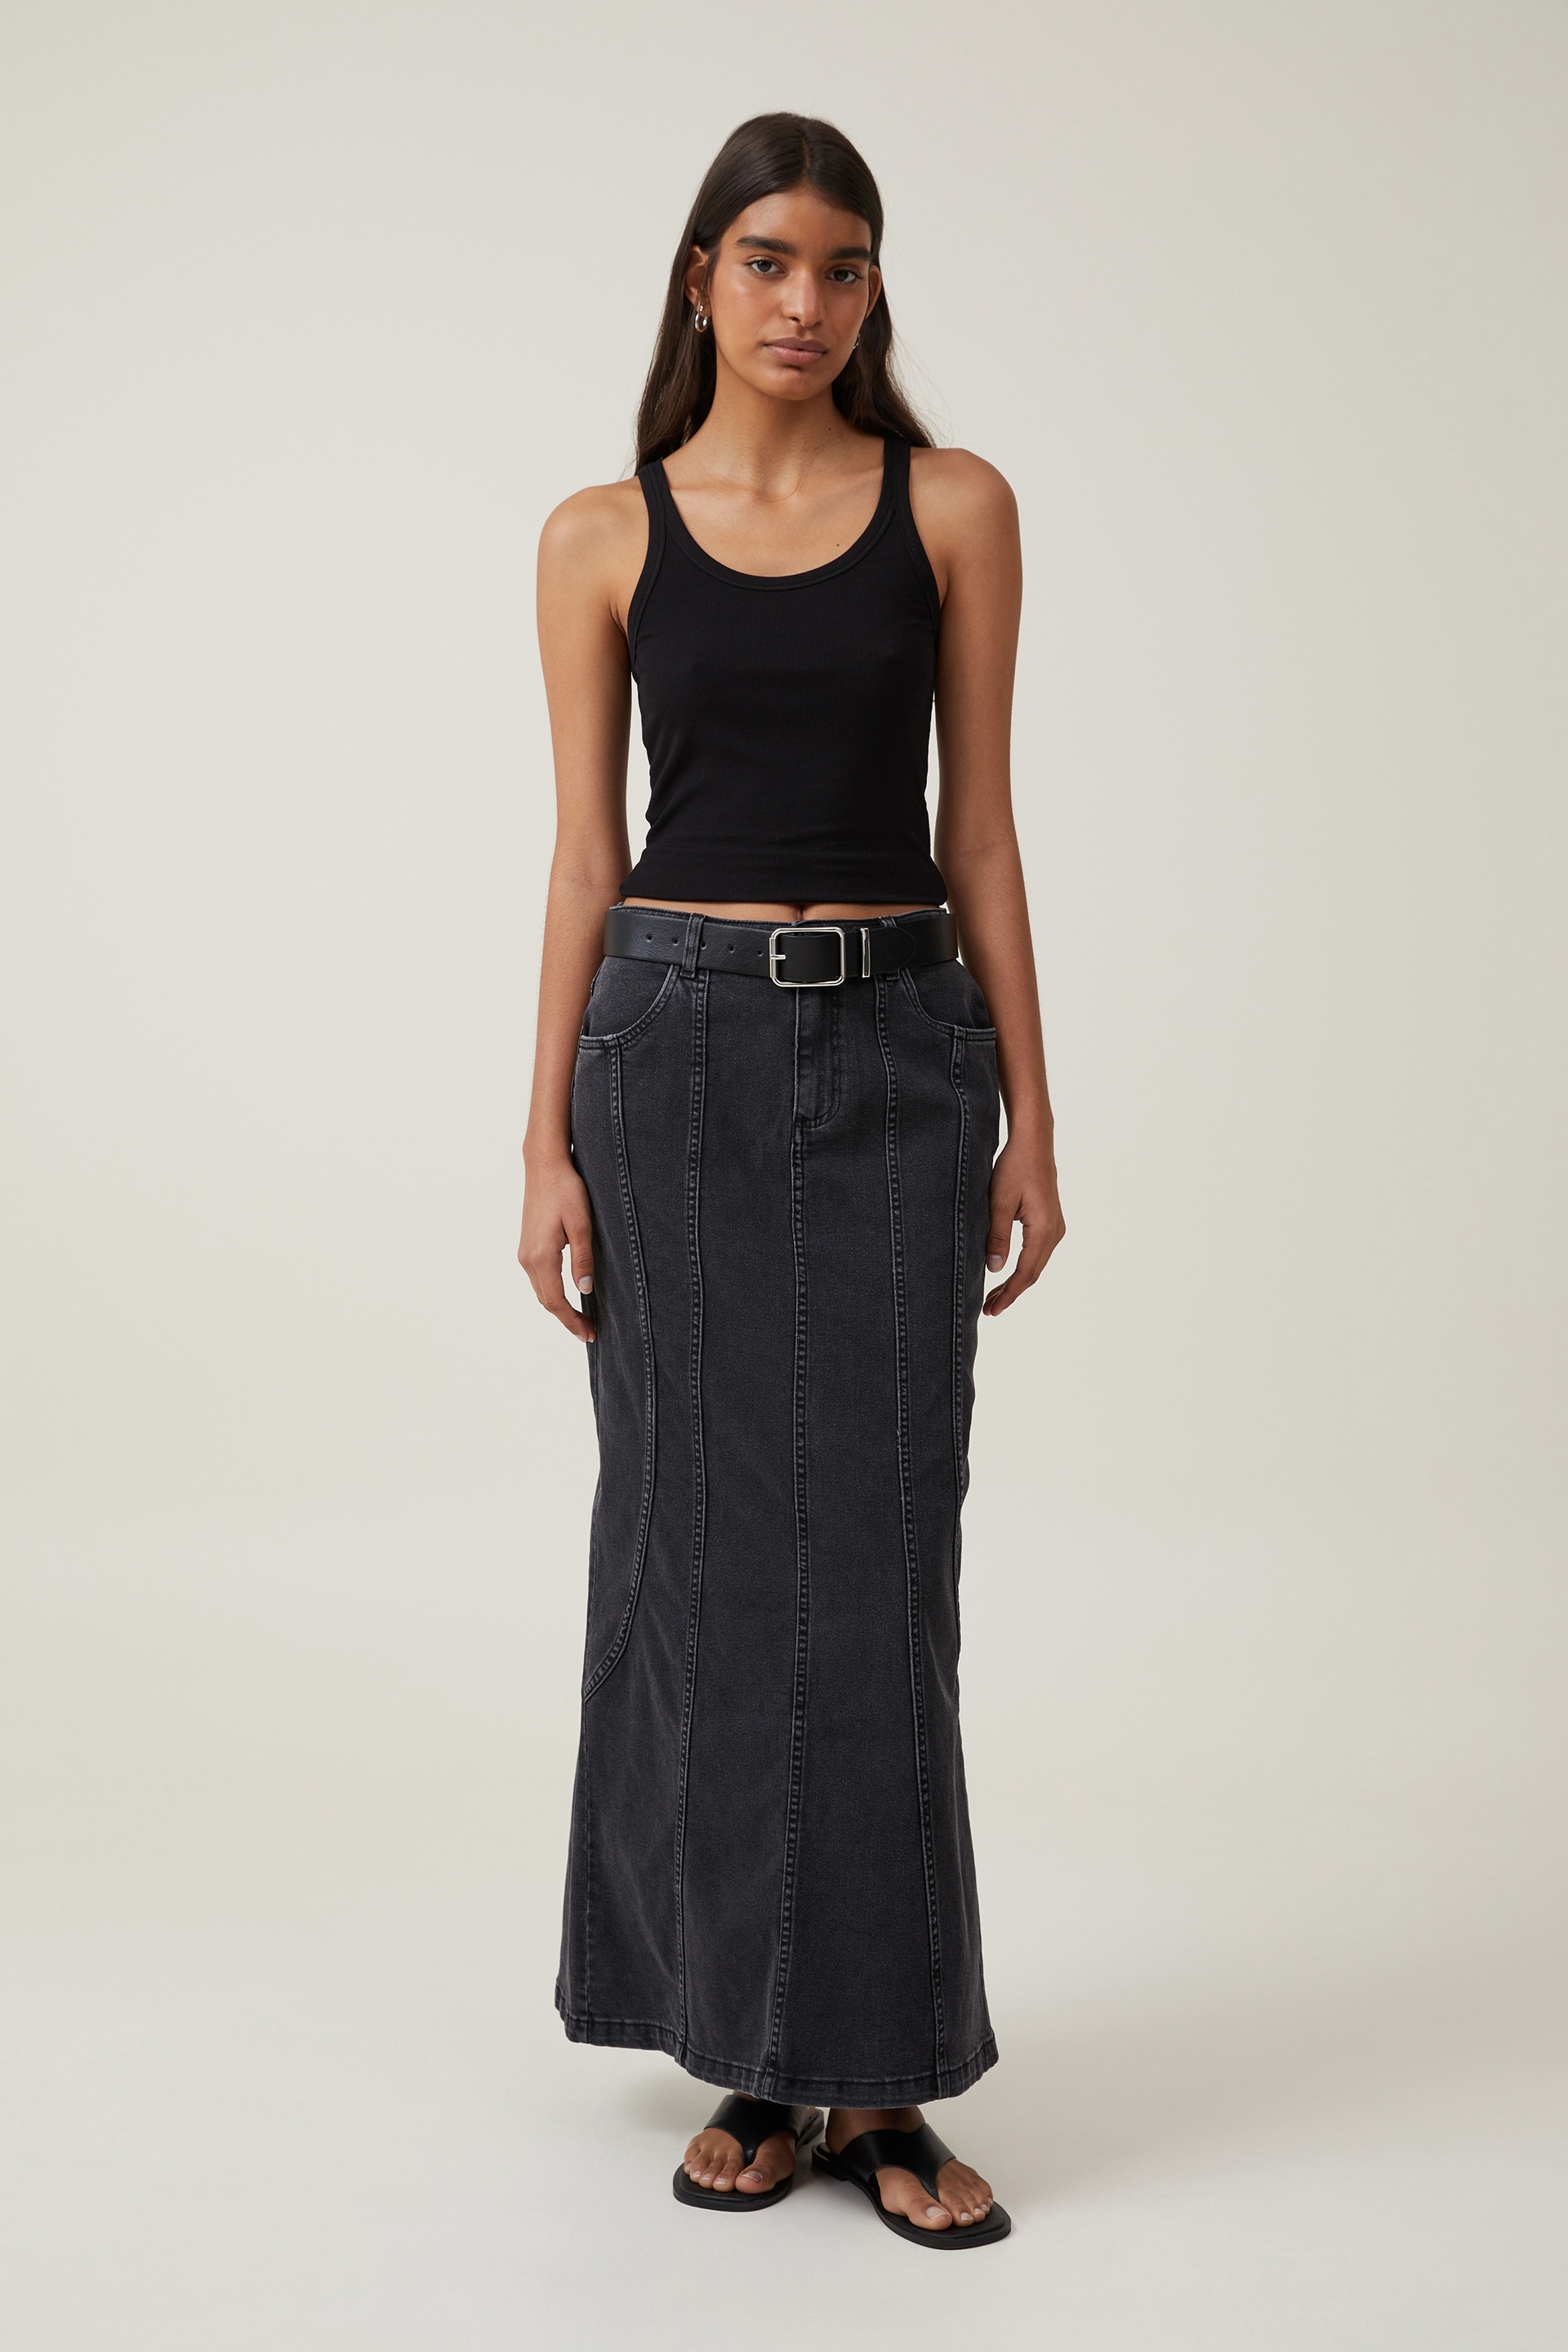 Cotton On Women - Panel Flare Denim Maxi Skirt - Graphite black